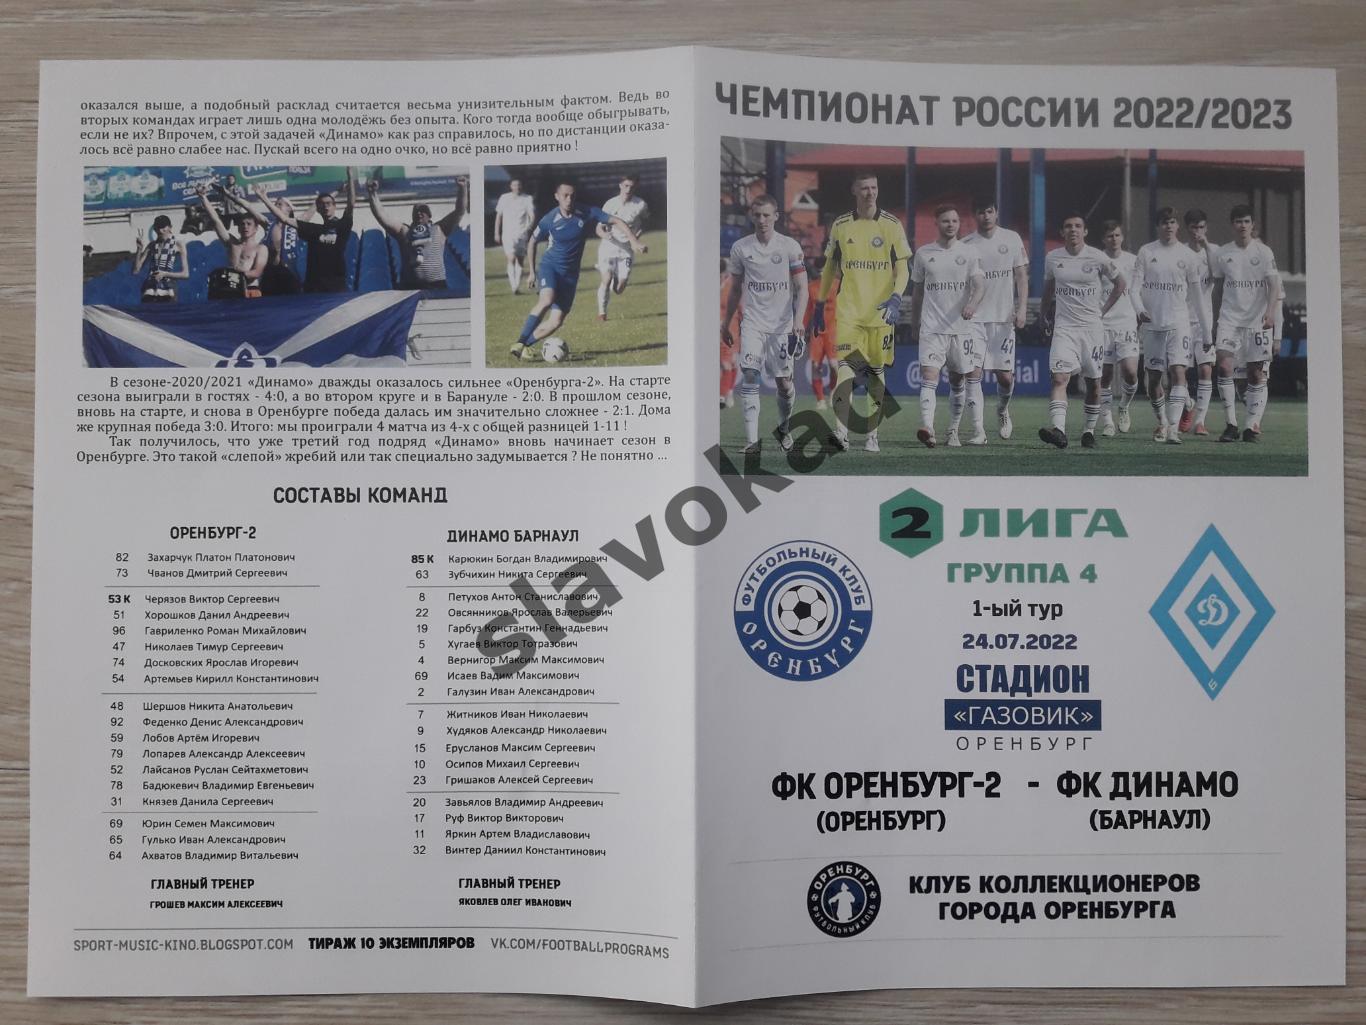 Оренбург 2 - Динамо Барнаул 24.07.2022 - авторская программка 2